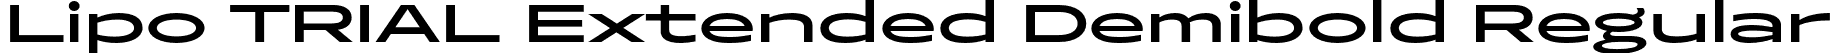 Lipo TRIAL Extended Demibold Regular font | LipoTRIAL-ExtendedDemibold.otf